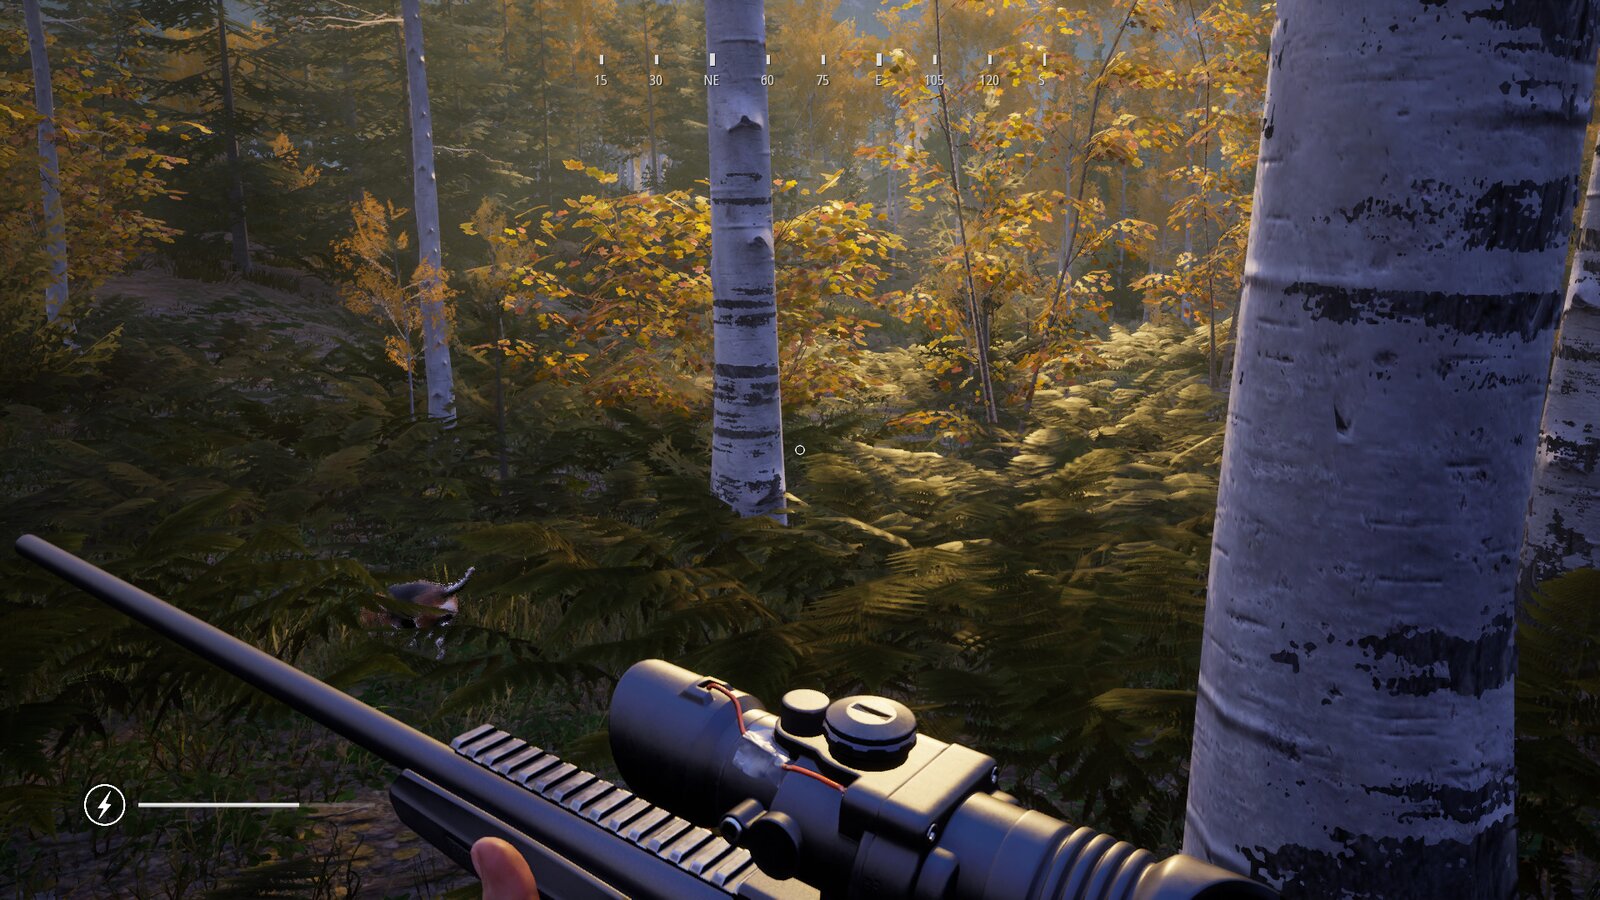 Hunting Simulator 2 - Elite Edition